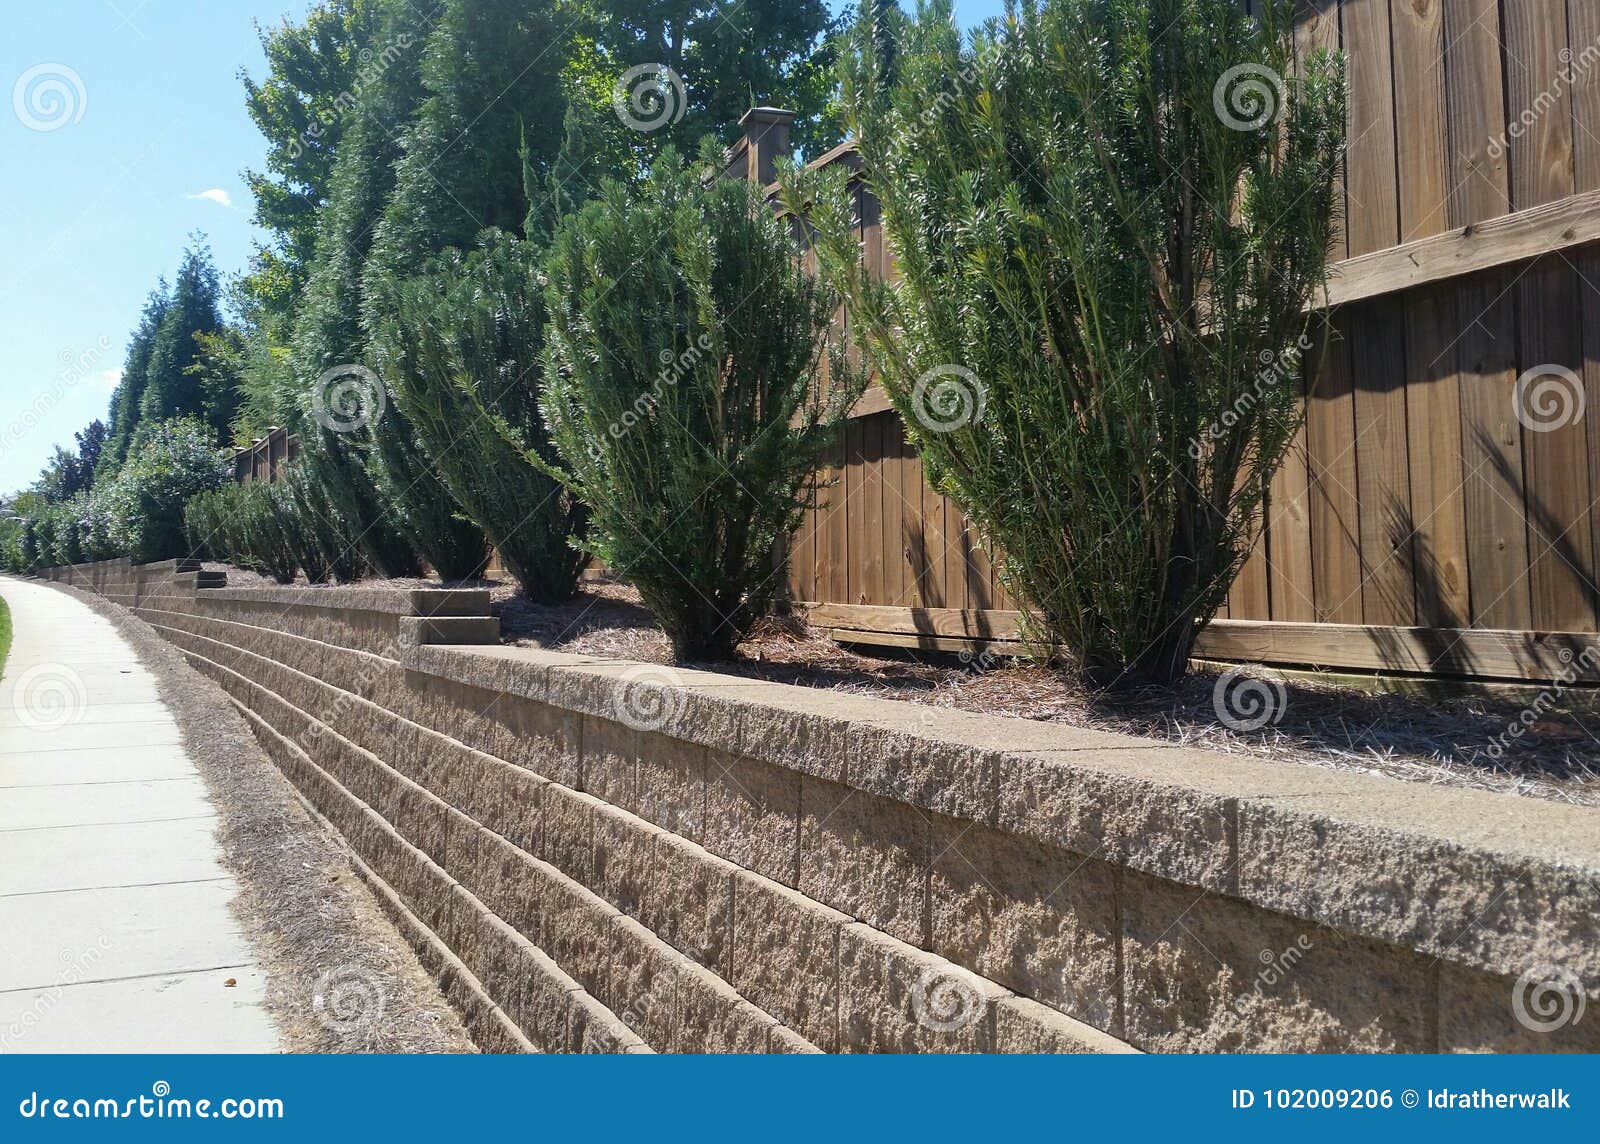 evergreen shrubs in brick retaining wall along sidewalk